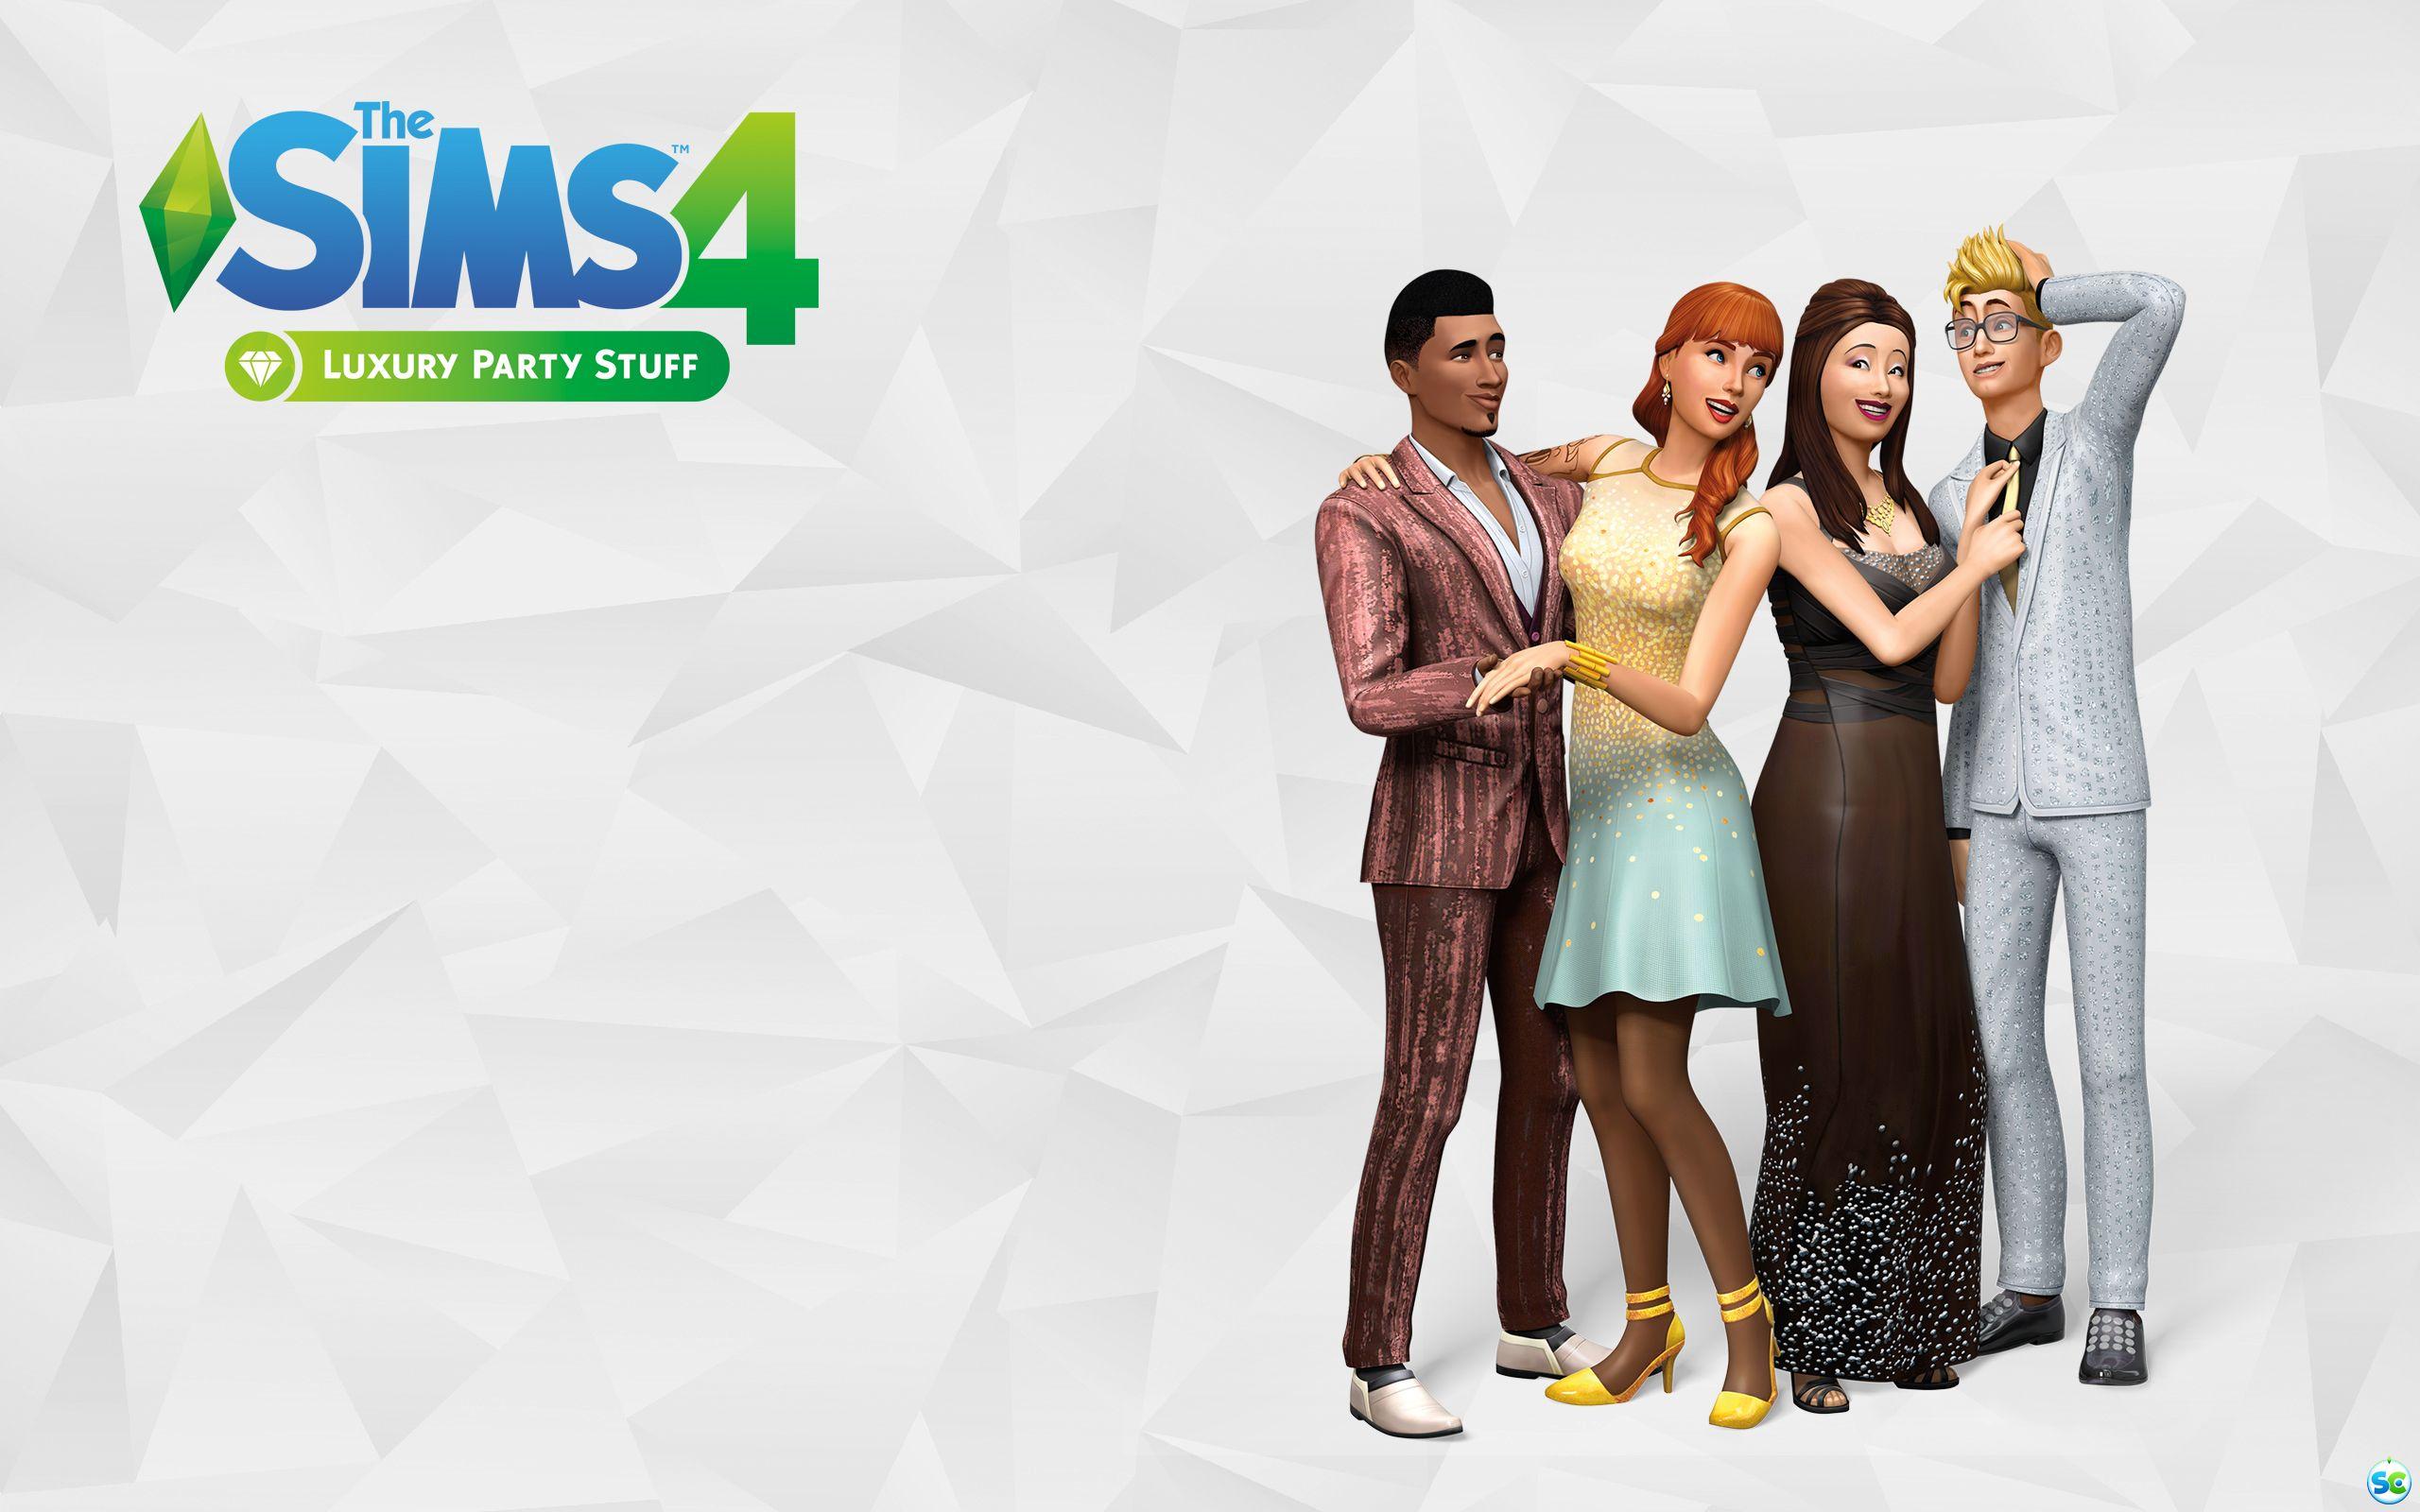 The Sims 4: New Wallpaper! (+ Windows 8 Themepack)